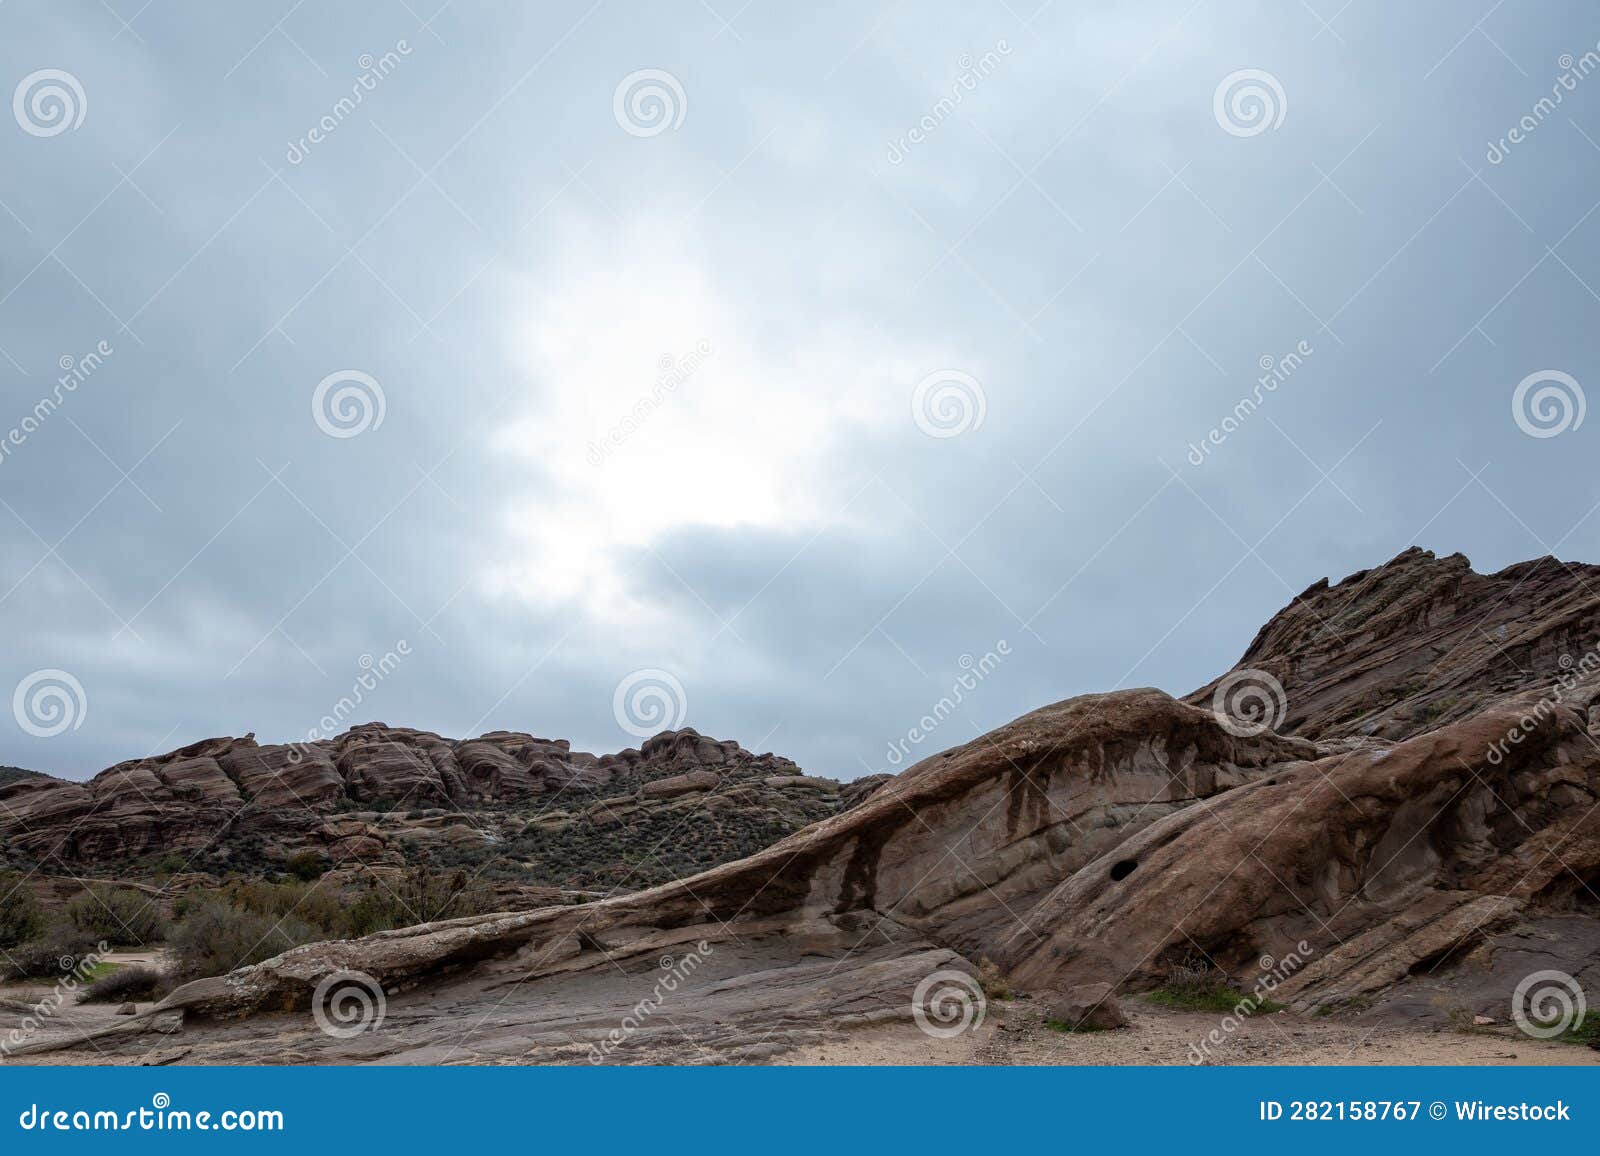 scenic view of vasquez rocks park in agua dulce, california against a clouded sky